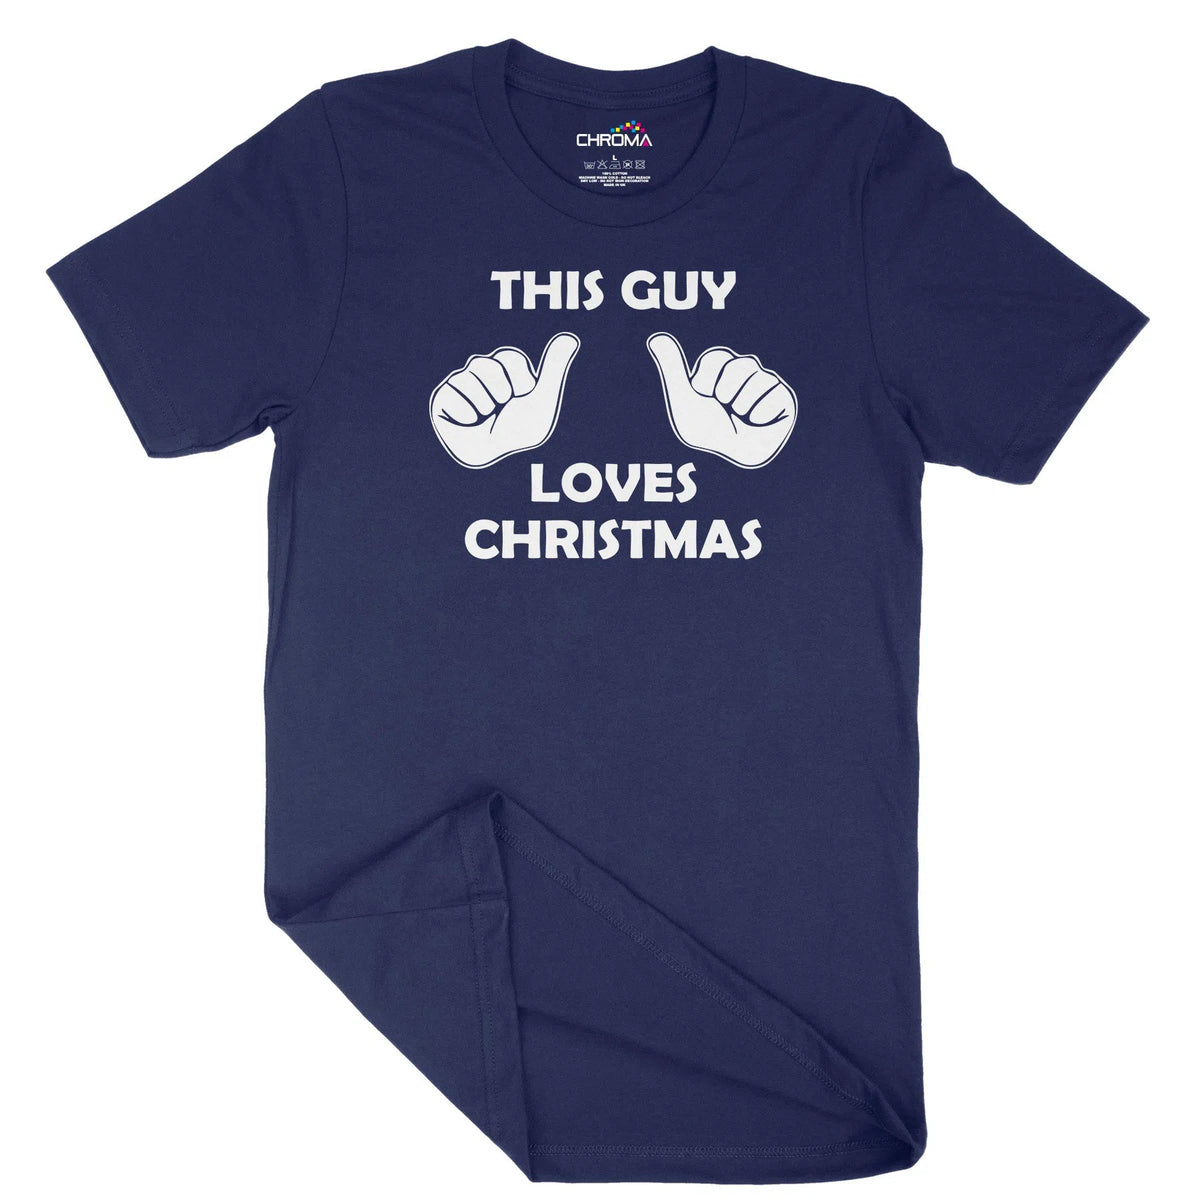 This Guy Loves Christmas Unisex Adult T-Shirt | Quality Slogan Clothin Chroma Clothing